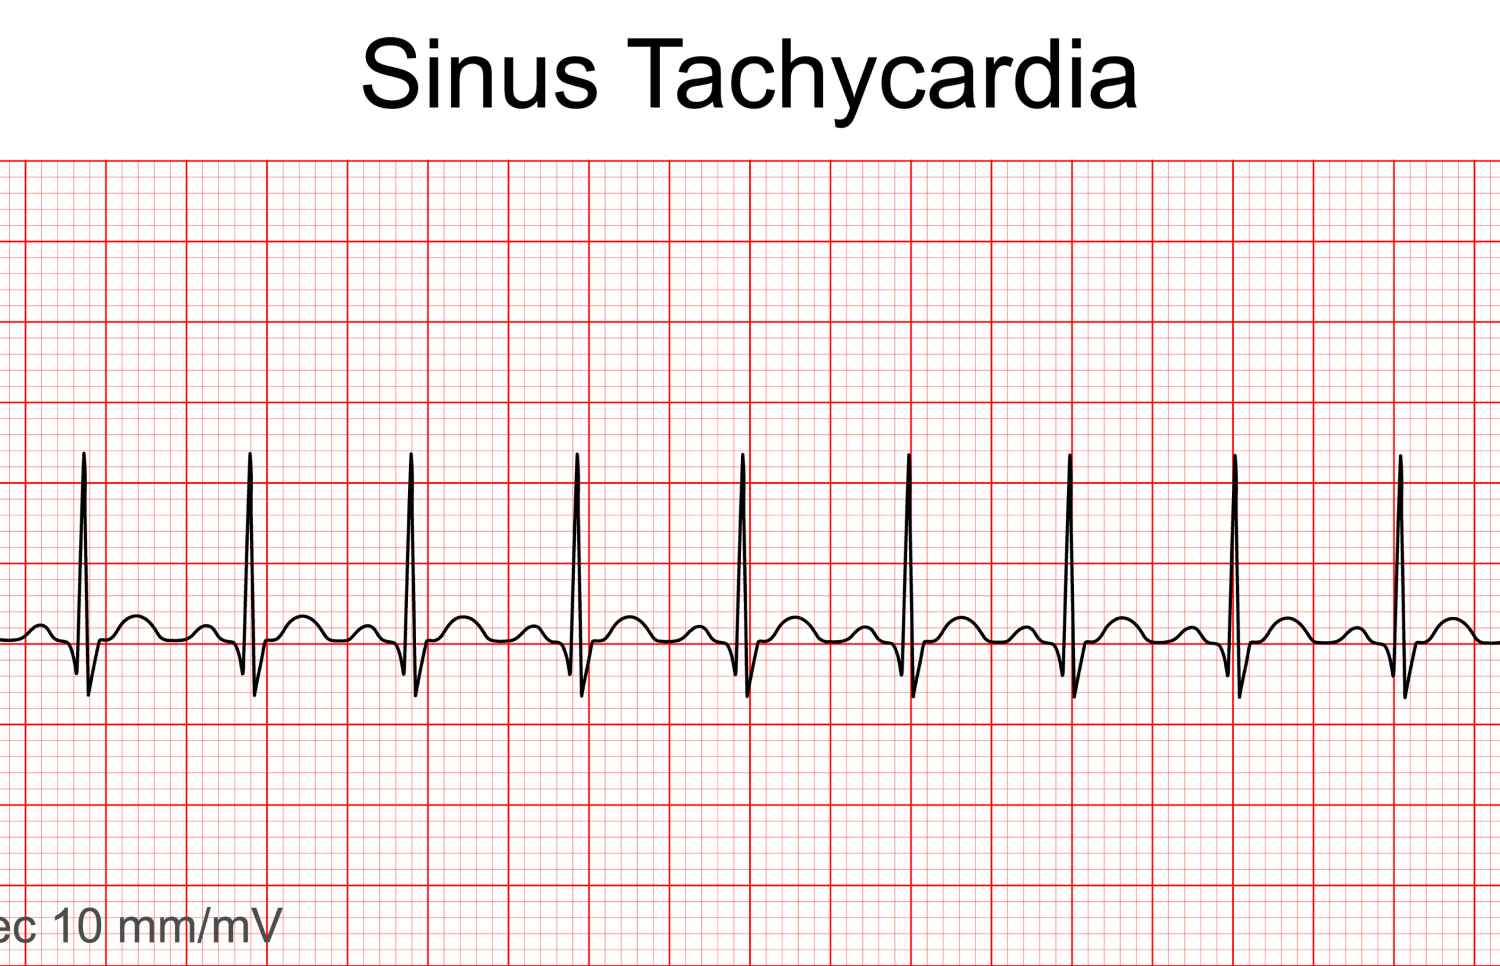 VA Disability Rating for Sinus Tachycardia